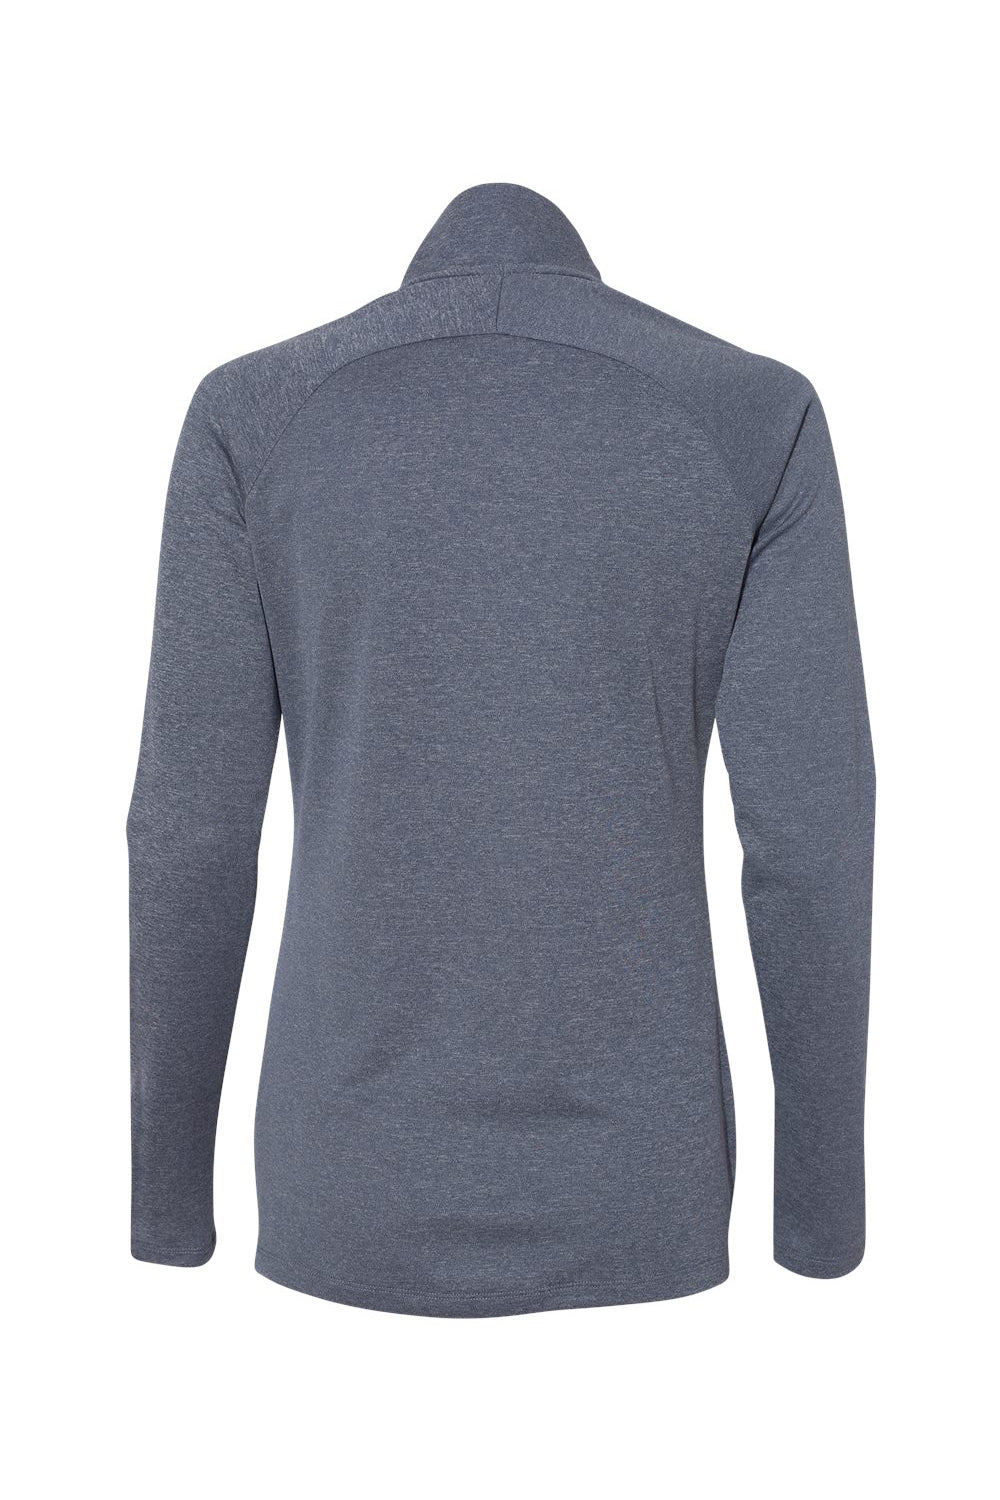 Adidas A281 Womens UPF 50+ 1/4 Zip Sweatshirt Heather Collegiate Navy Blue/Carbon Grey Flat Back